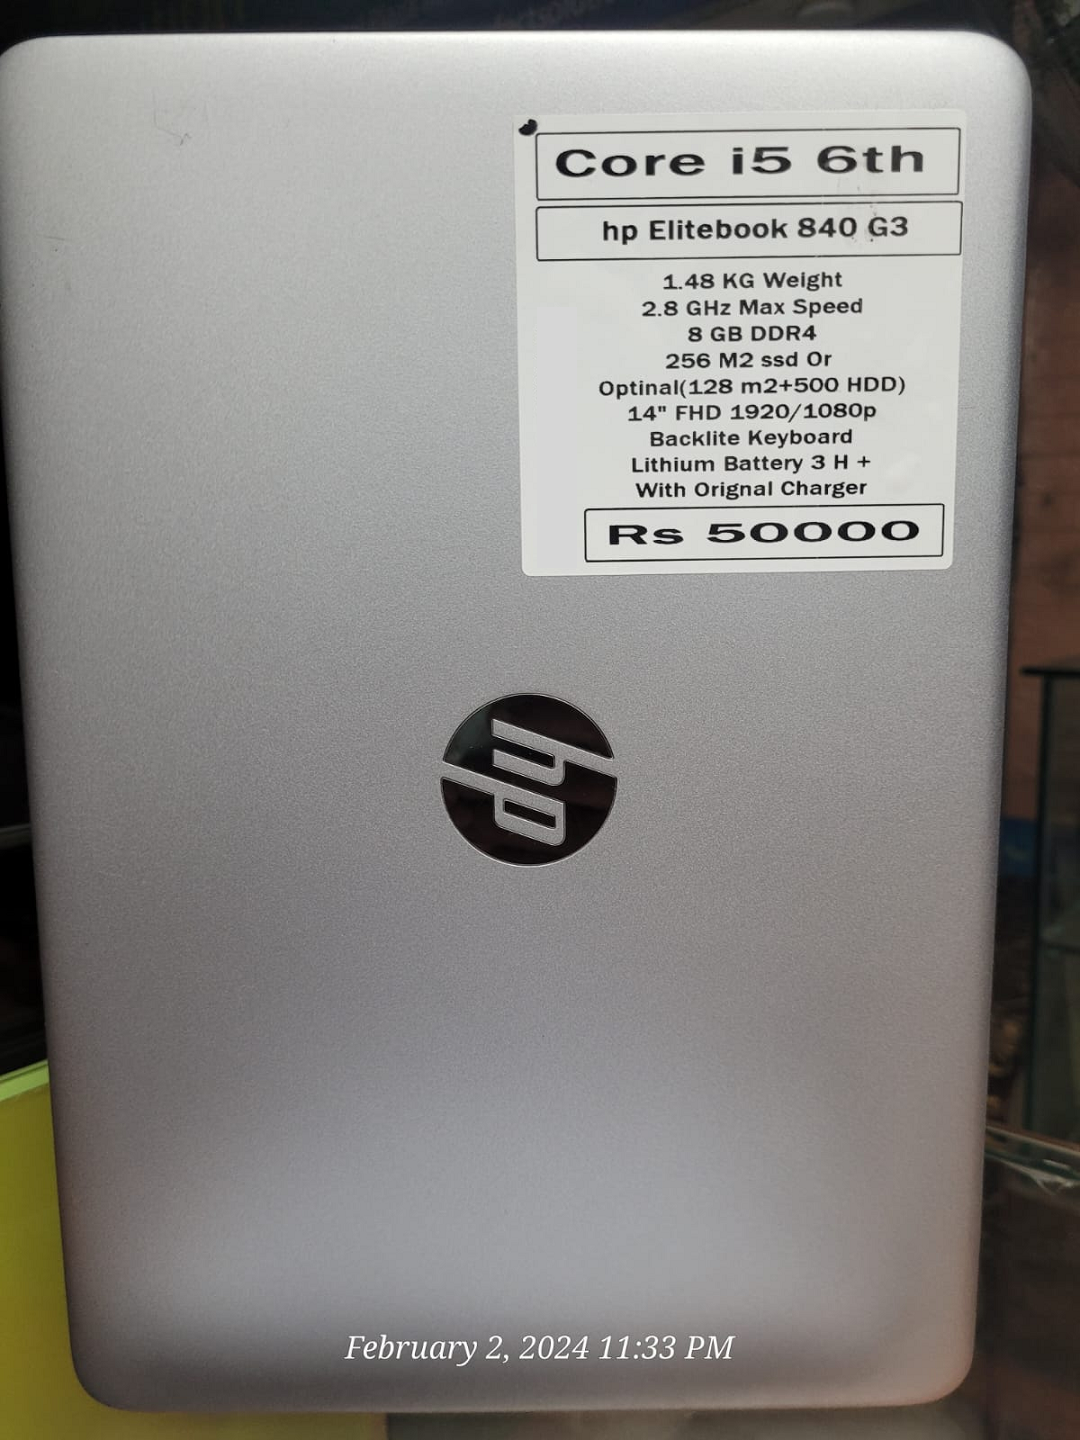 notebook Hp elitebook 840 G3 core i5 6th generation laptop price in pakistan